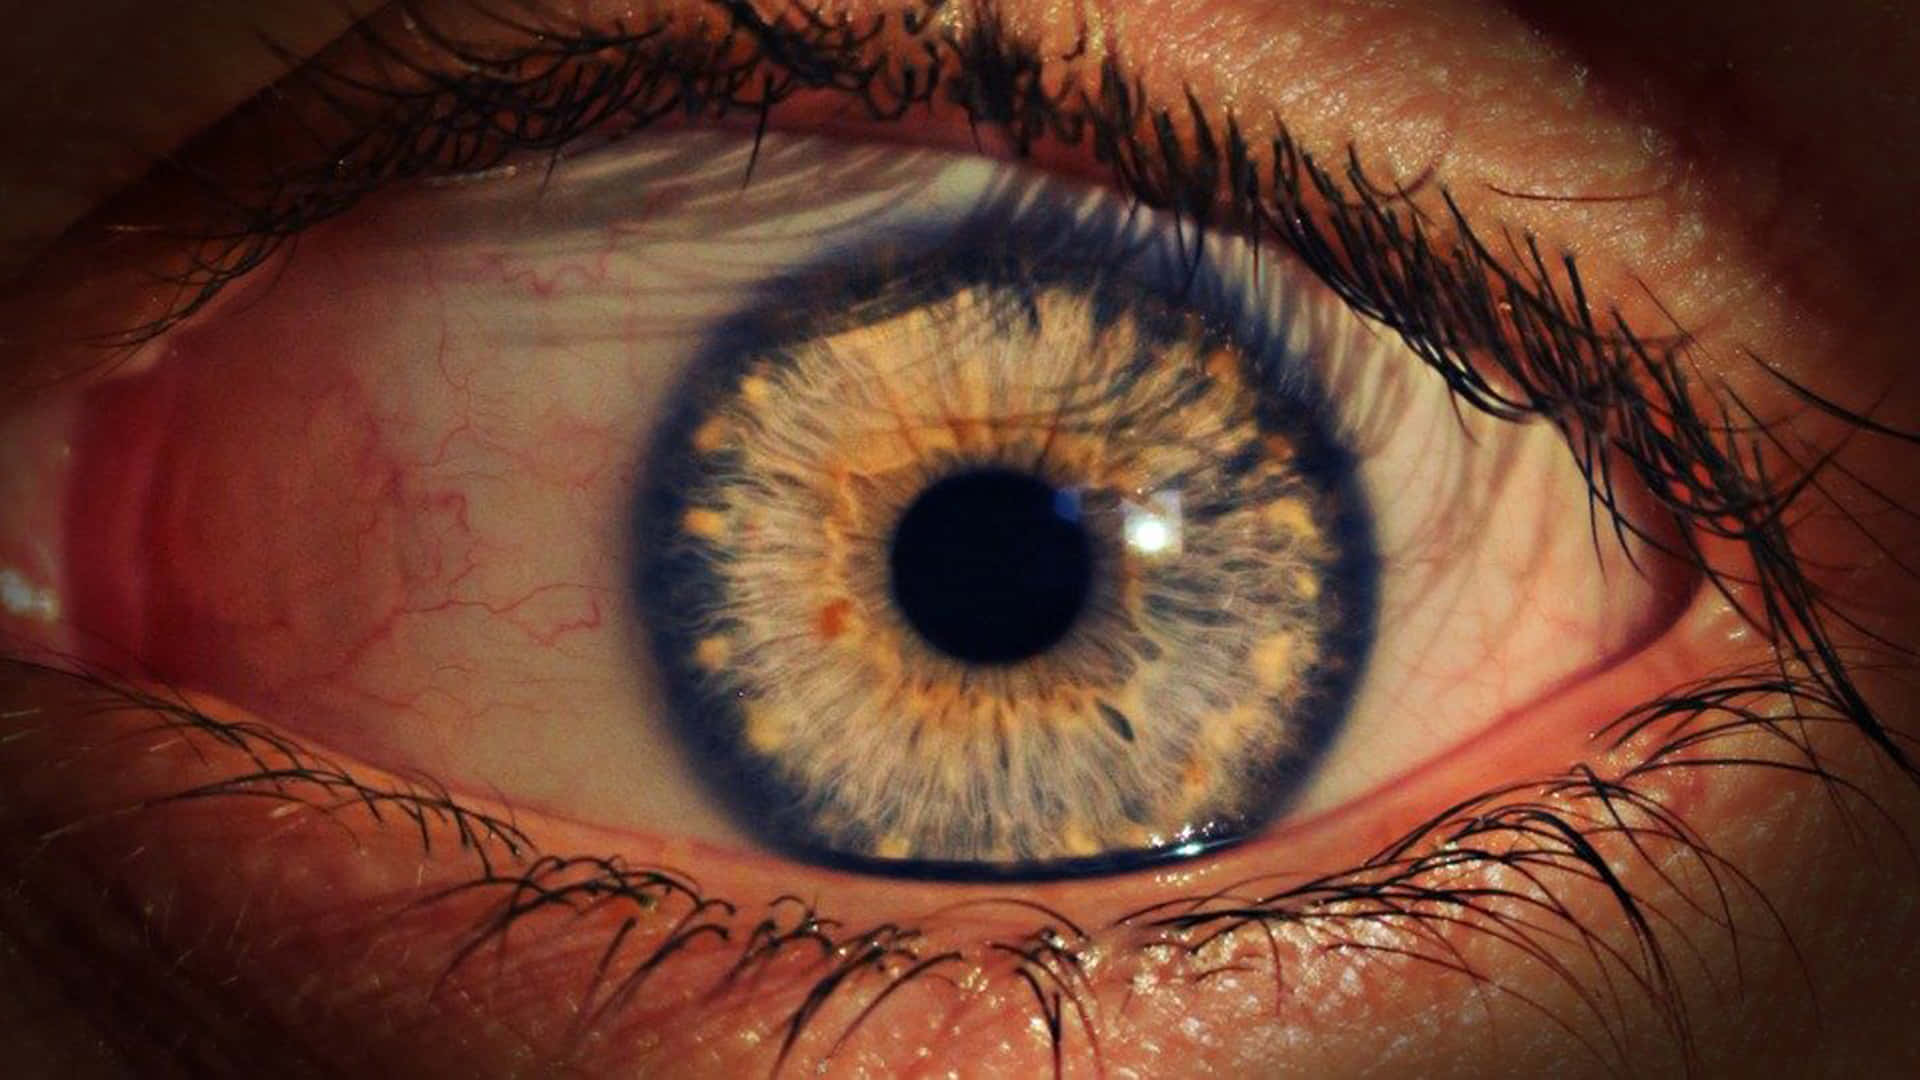 Striking Closeup of a Human Eye with Blue Ring Wallpaper